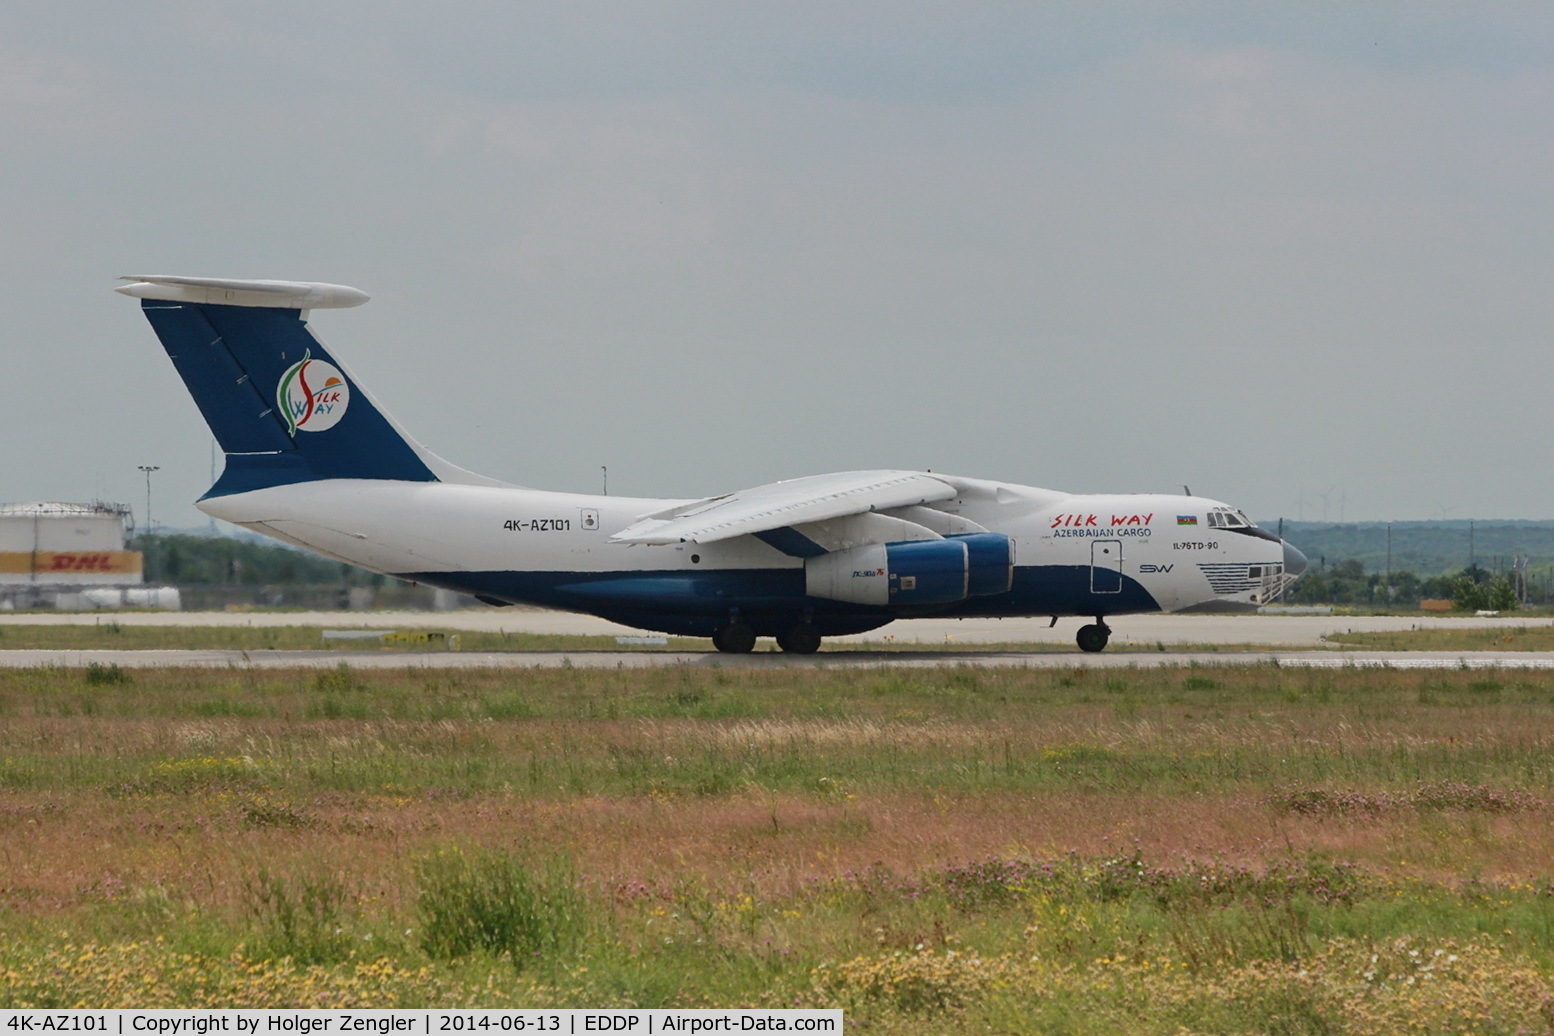 4K-AZ101, 1997 Ilyushin Il-76TD-90VD C/N 1063420716, One of two Silk Way IL 79 connecting LEJ with GYD is leaving via rwy 26L...